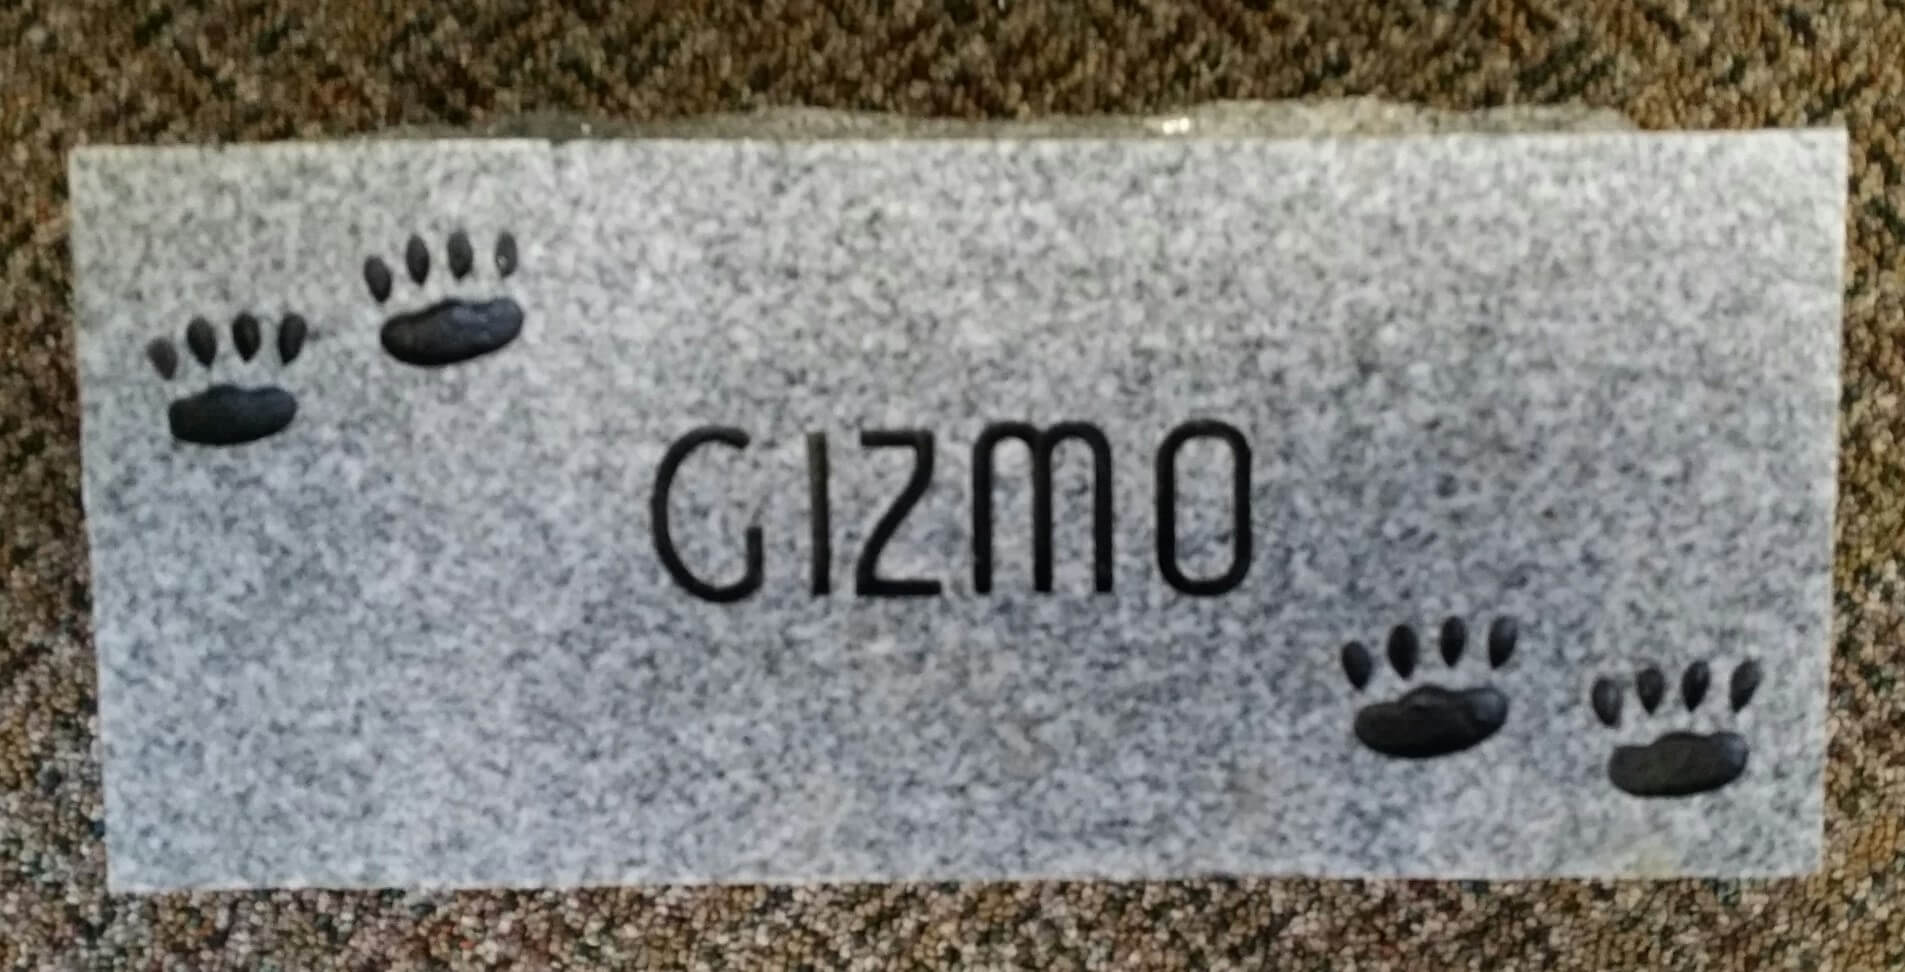 A memorial slab for the pet named Gizmo